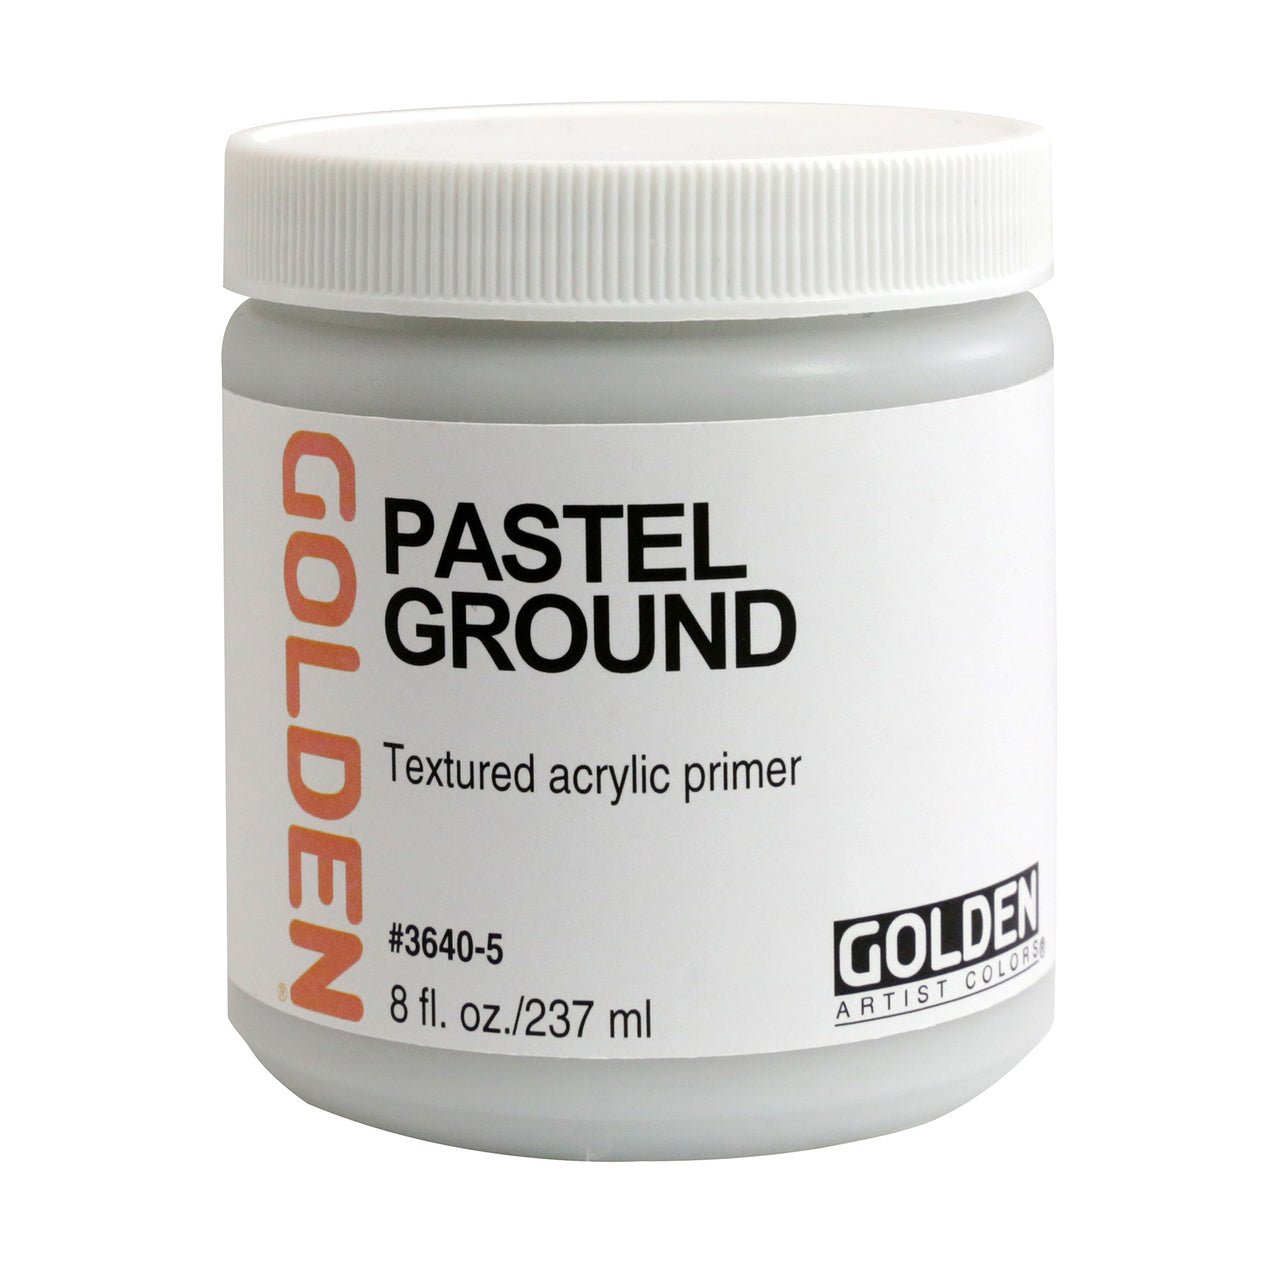 Golden Acrylic Pastel Ground 8 oz - merriartist.com